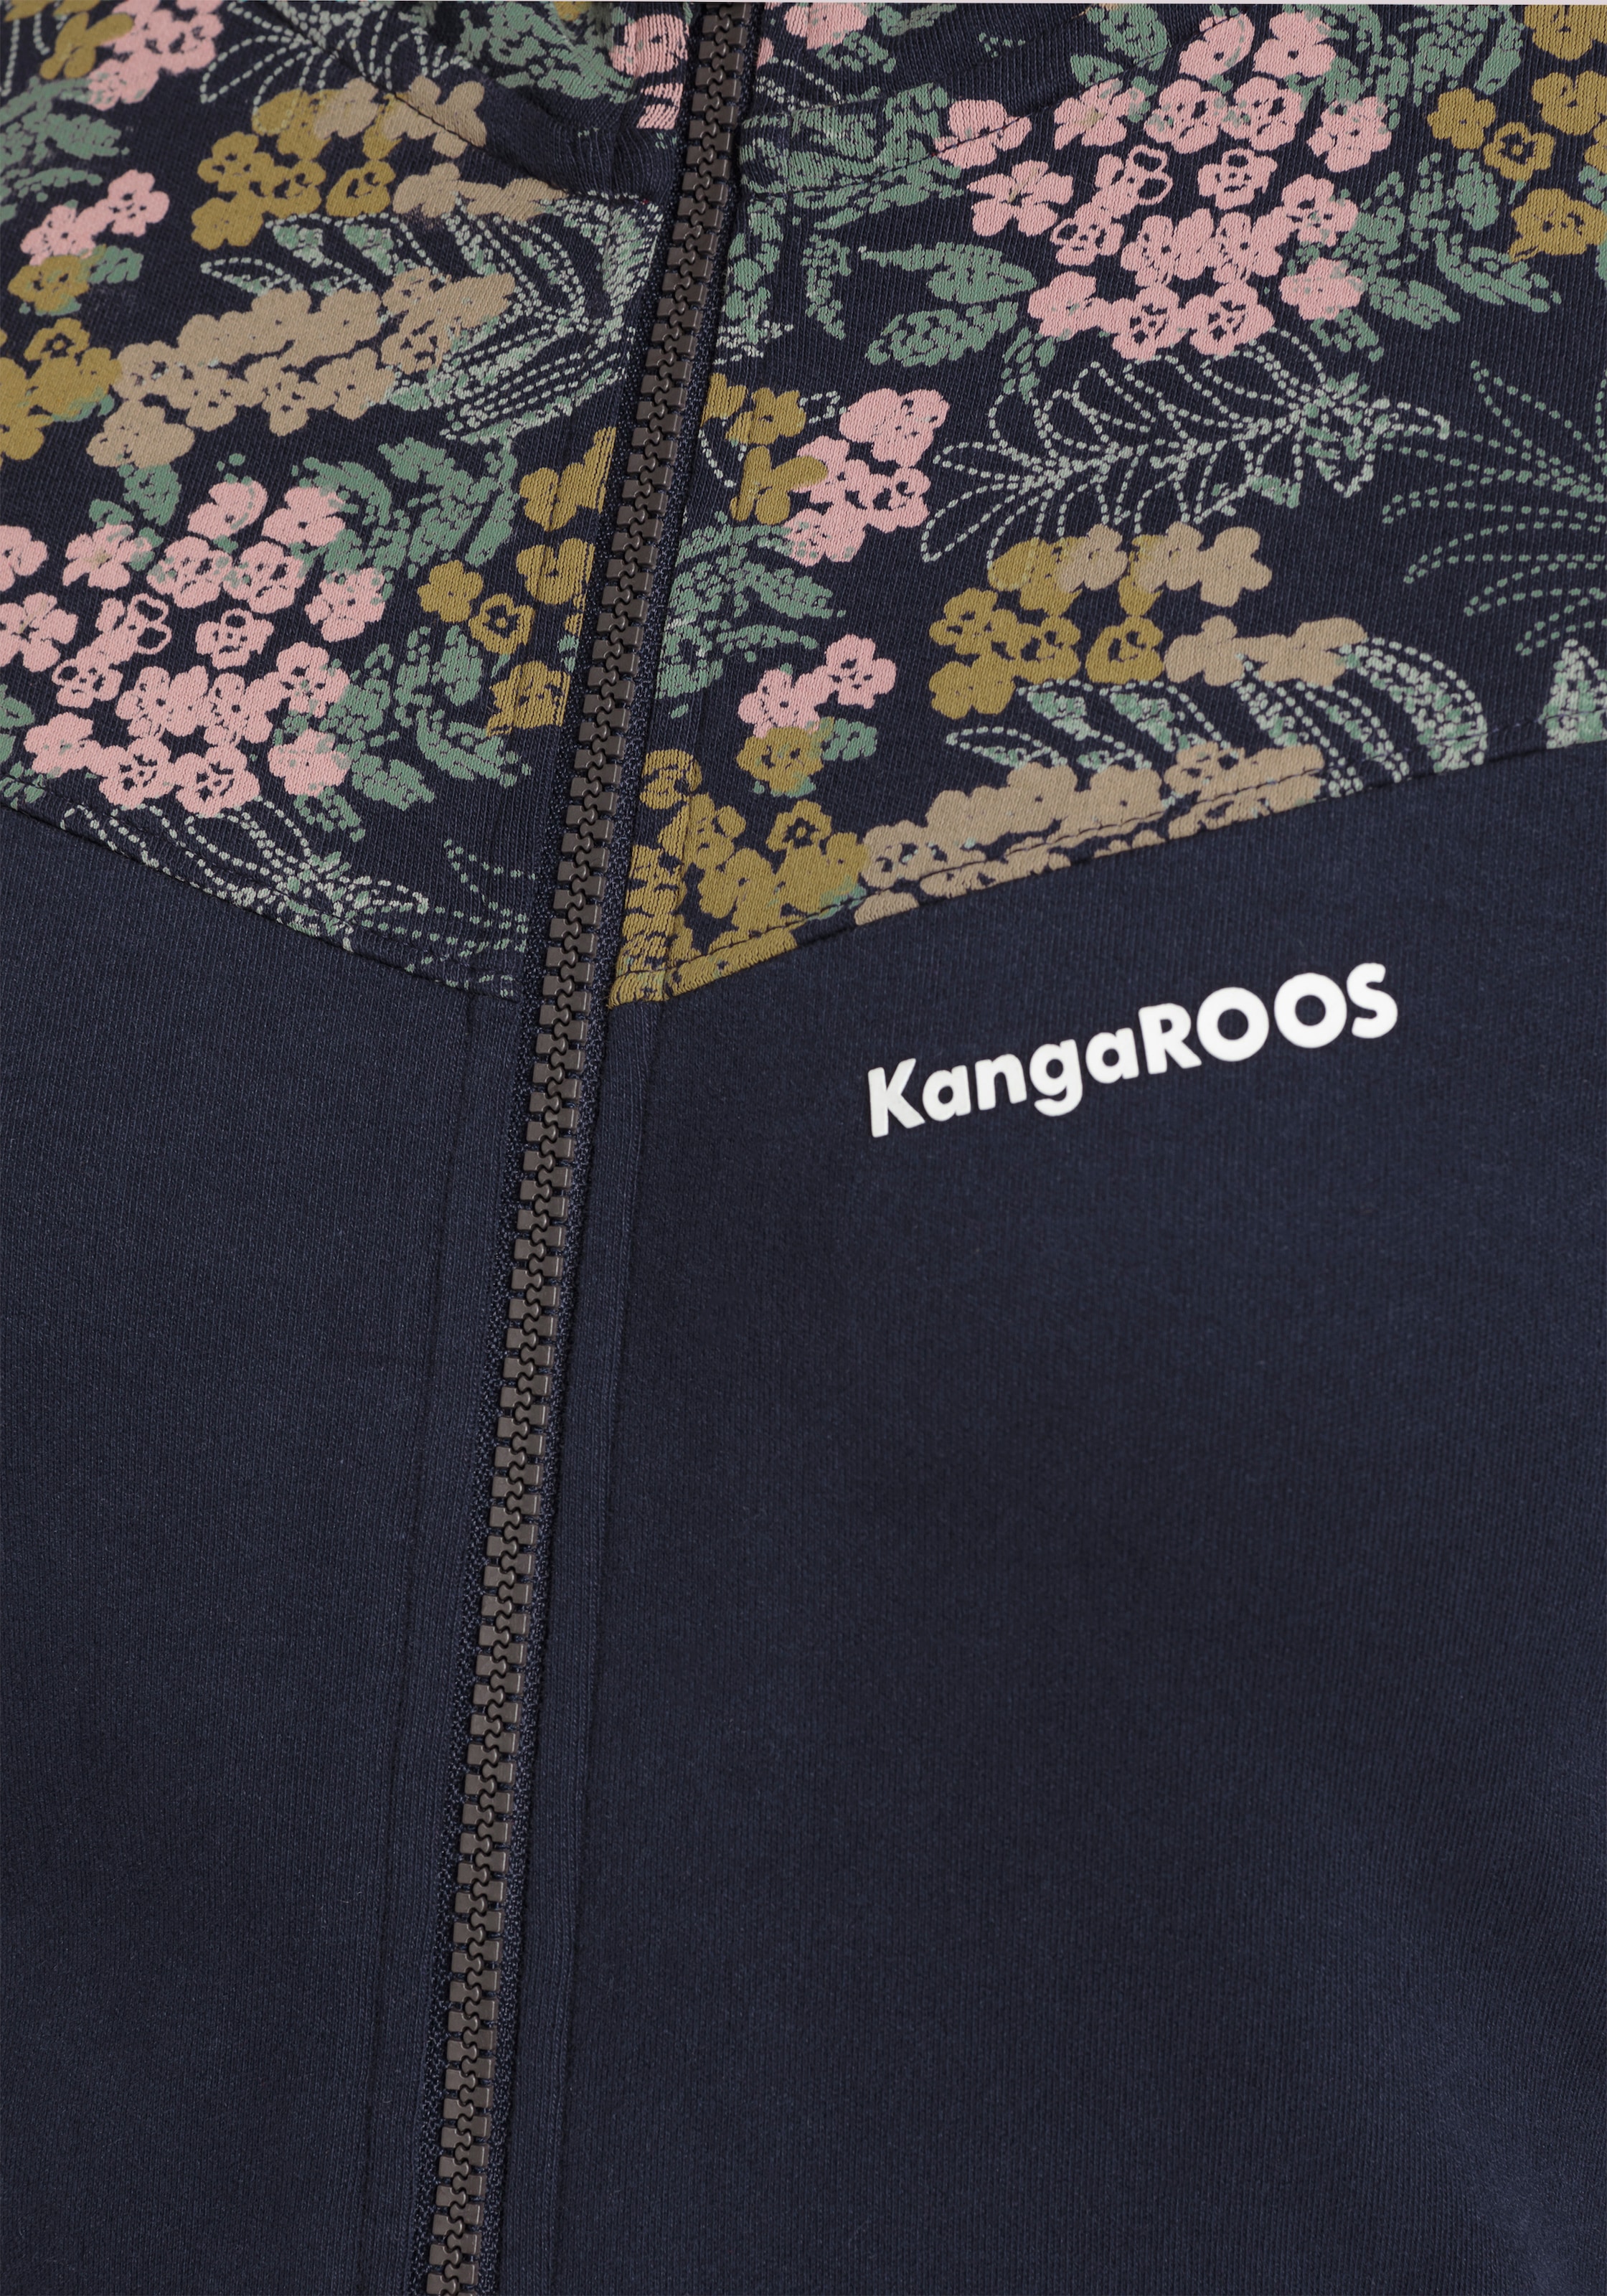 mit KangaROOS | Blumen kaufen Kapuzensweatjacke, BAUR Alloverdruck-NEUE-KOLLEKTION